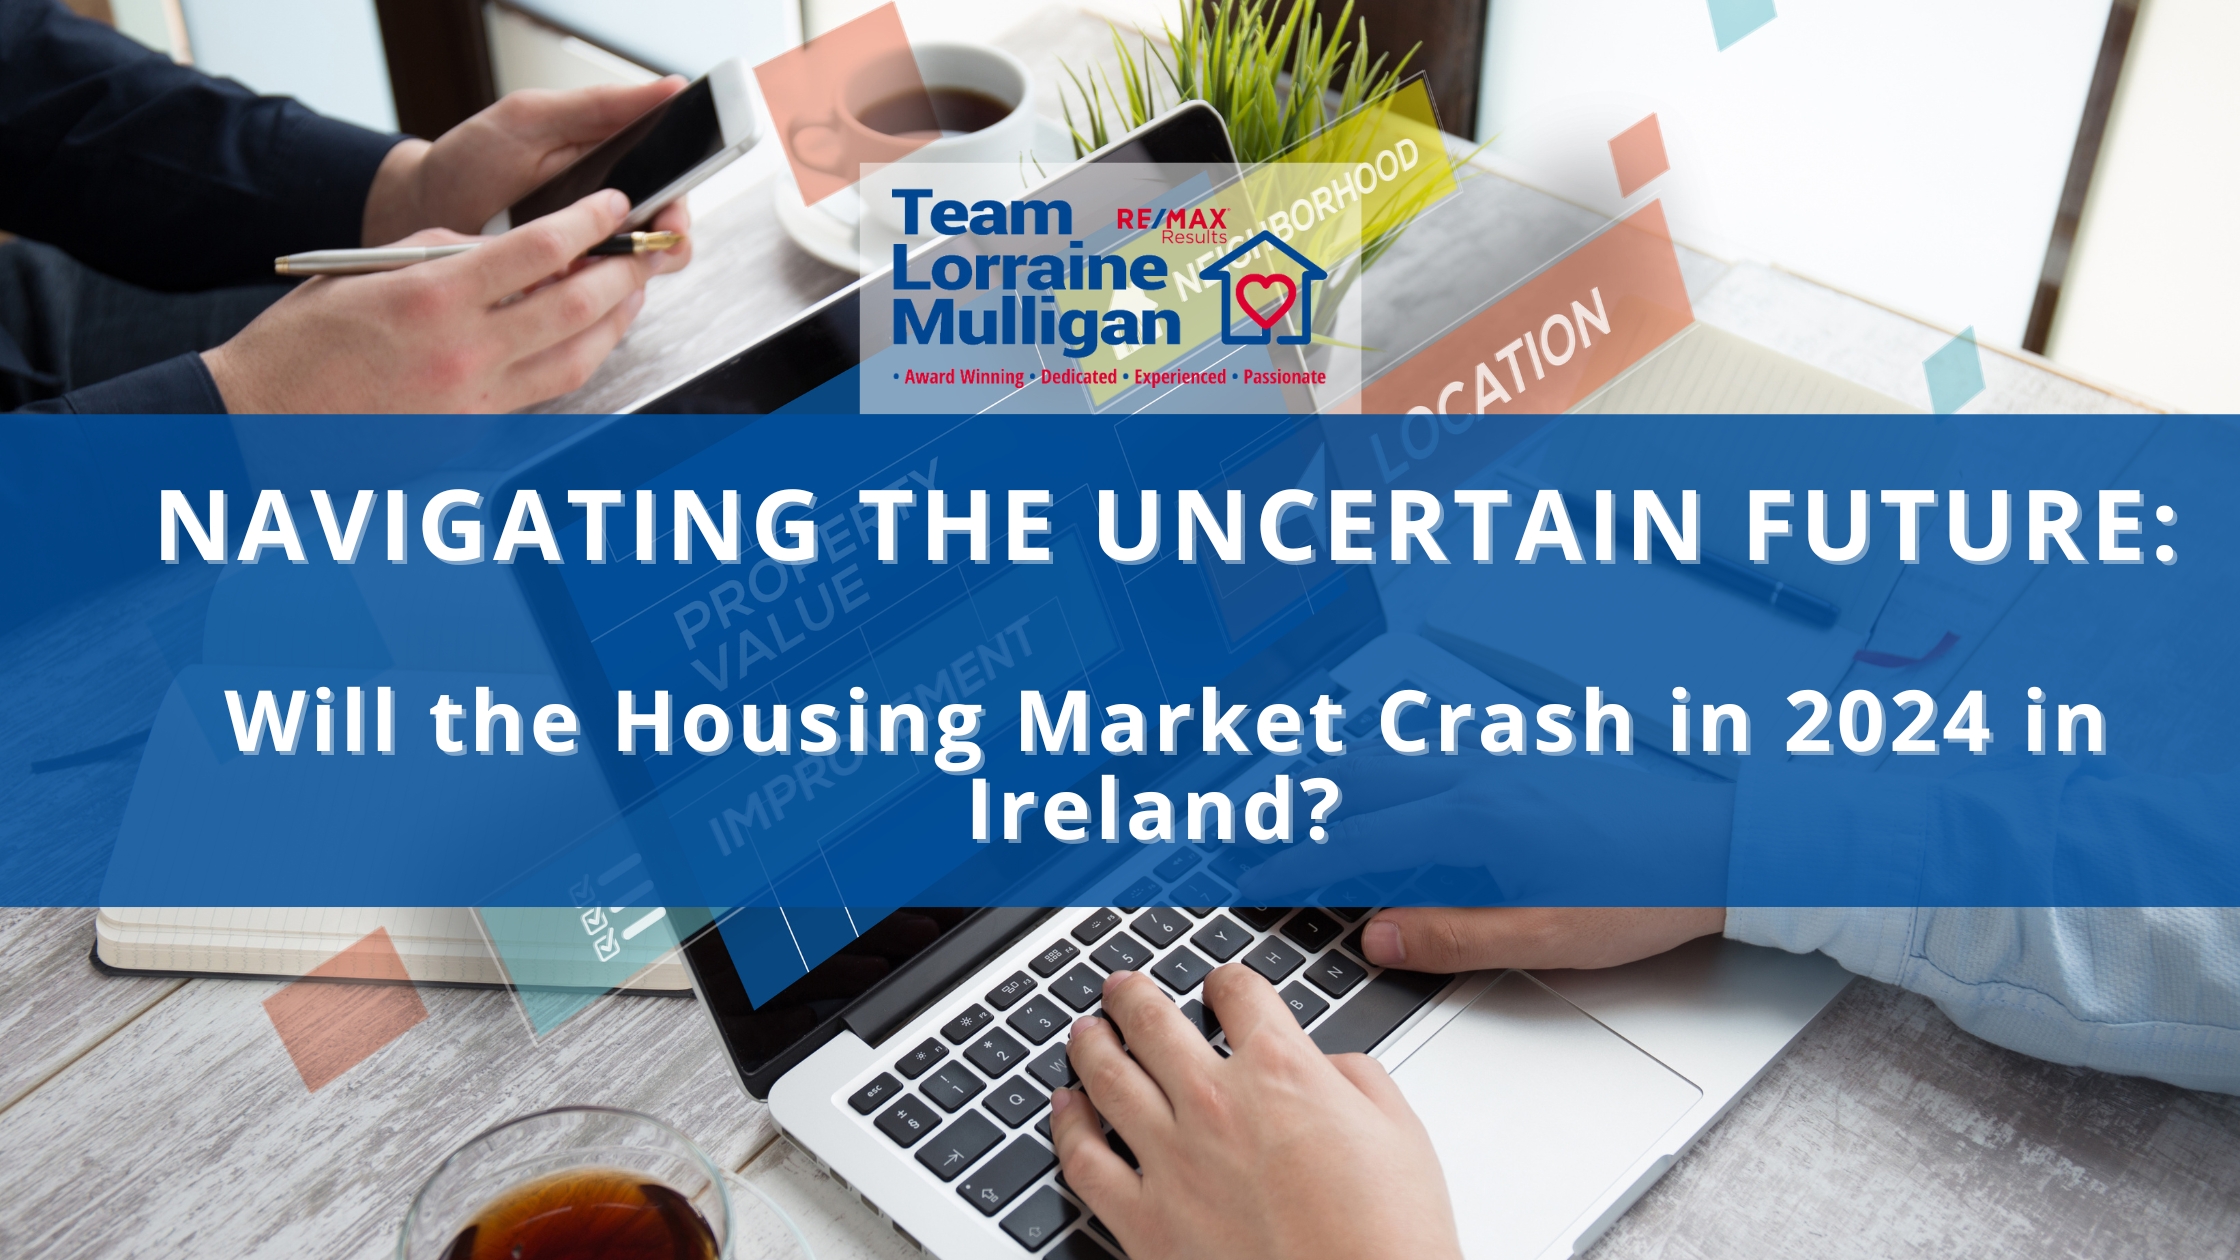 Will the Housing Market Crash in 2024 in Ireland?